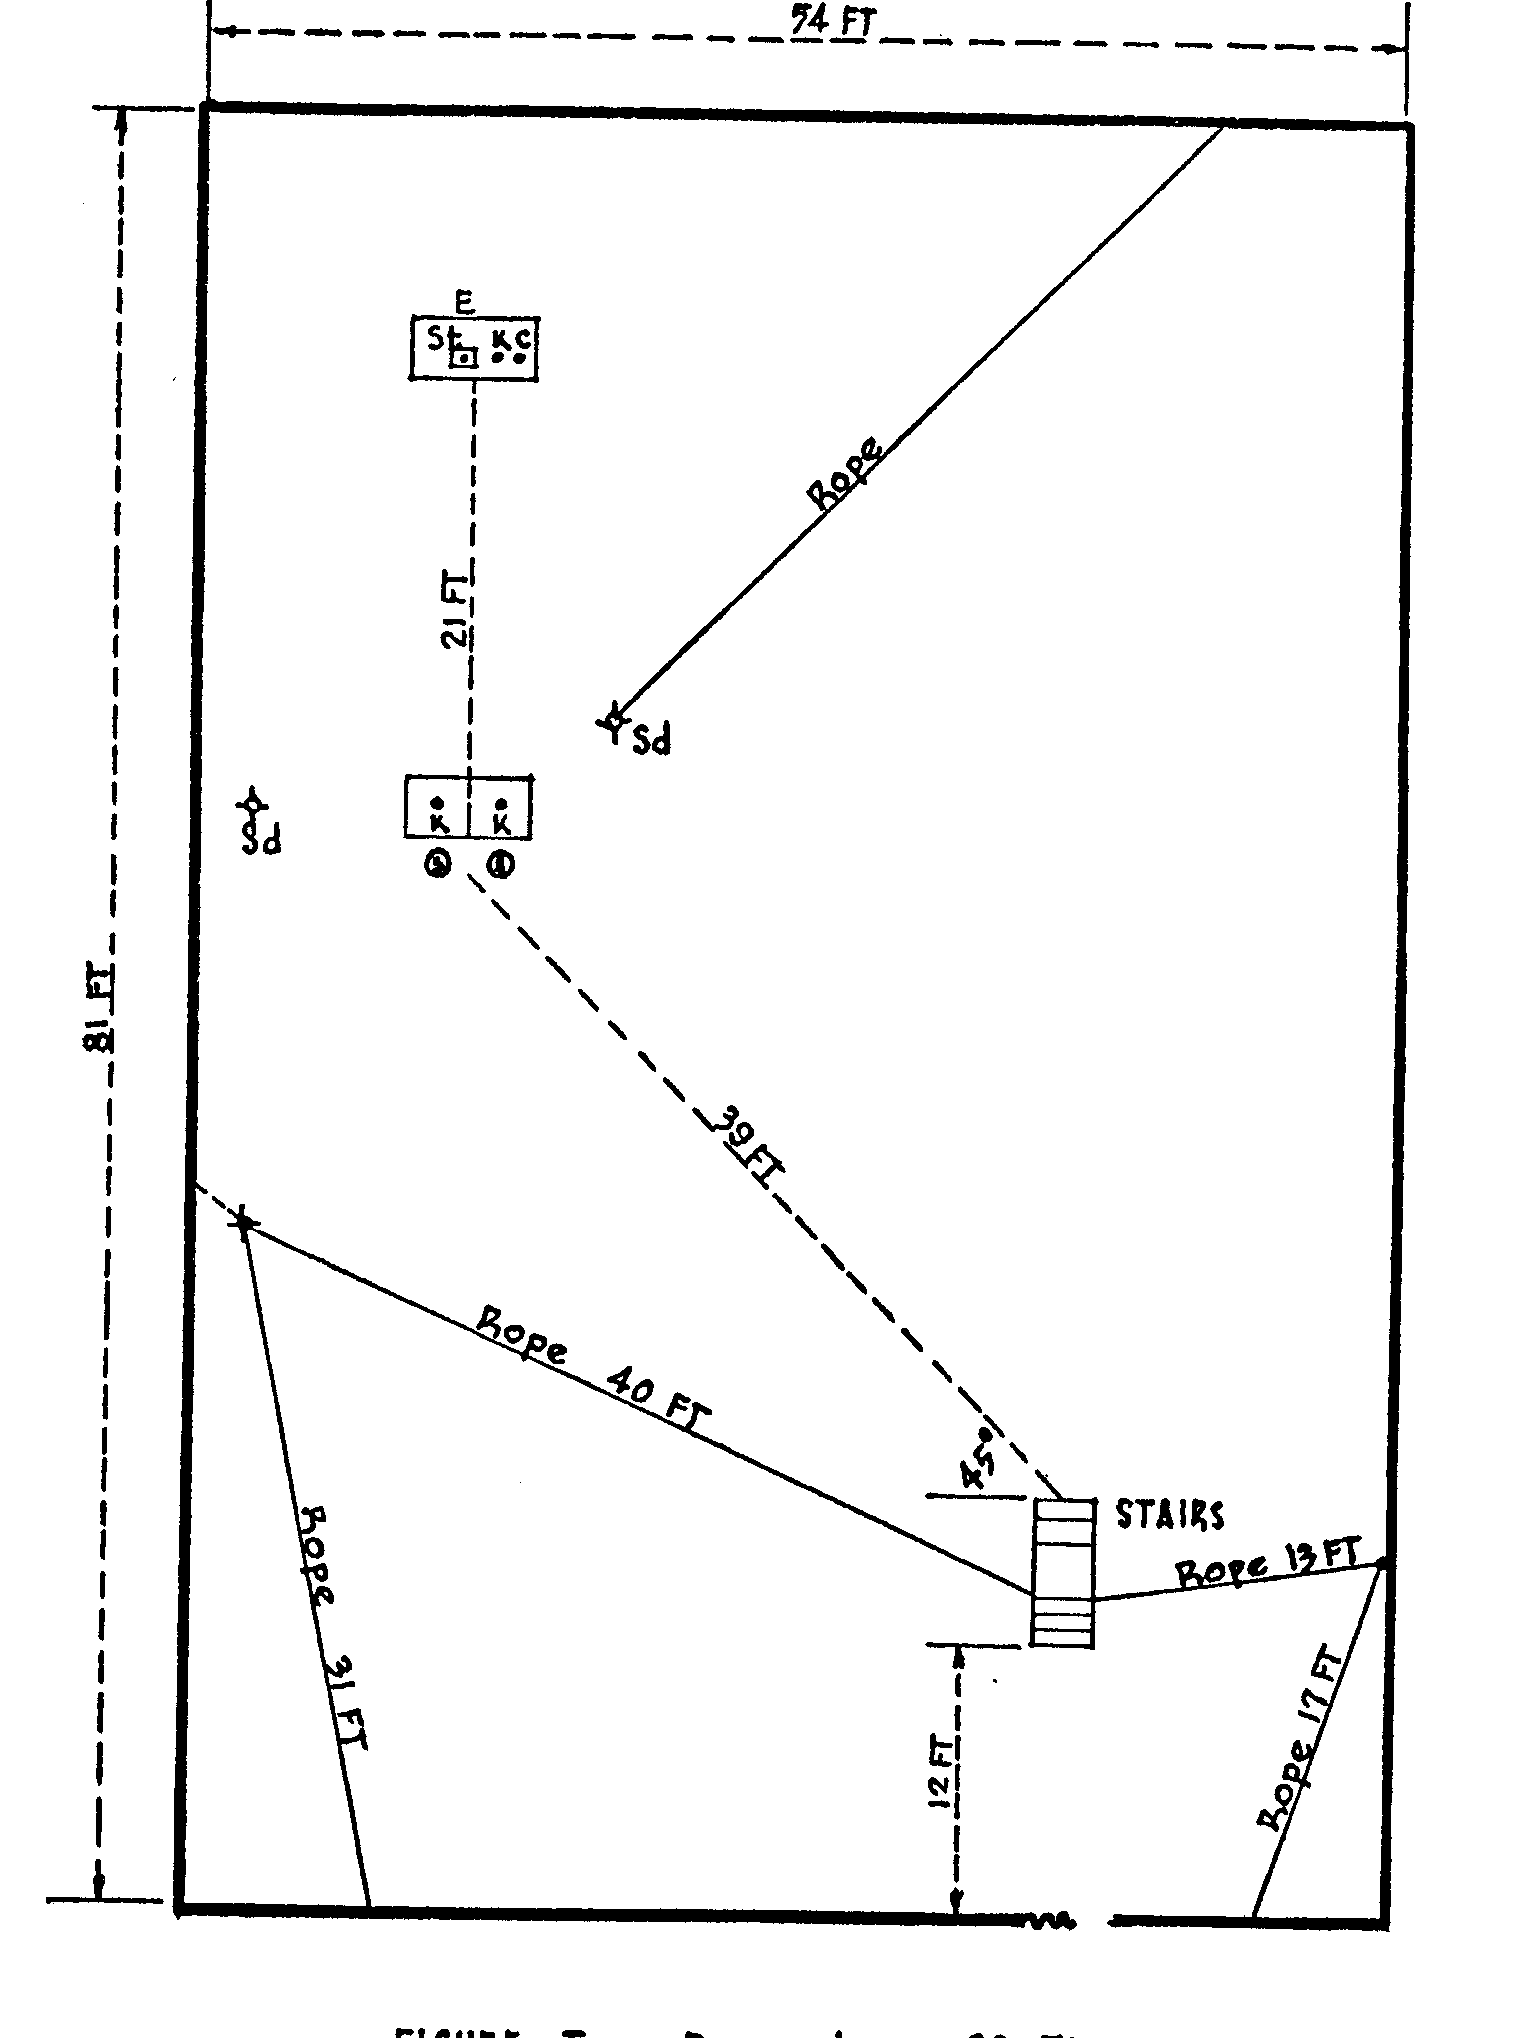 Figure sketch layout of laboratory